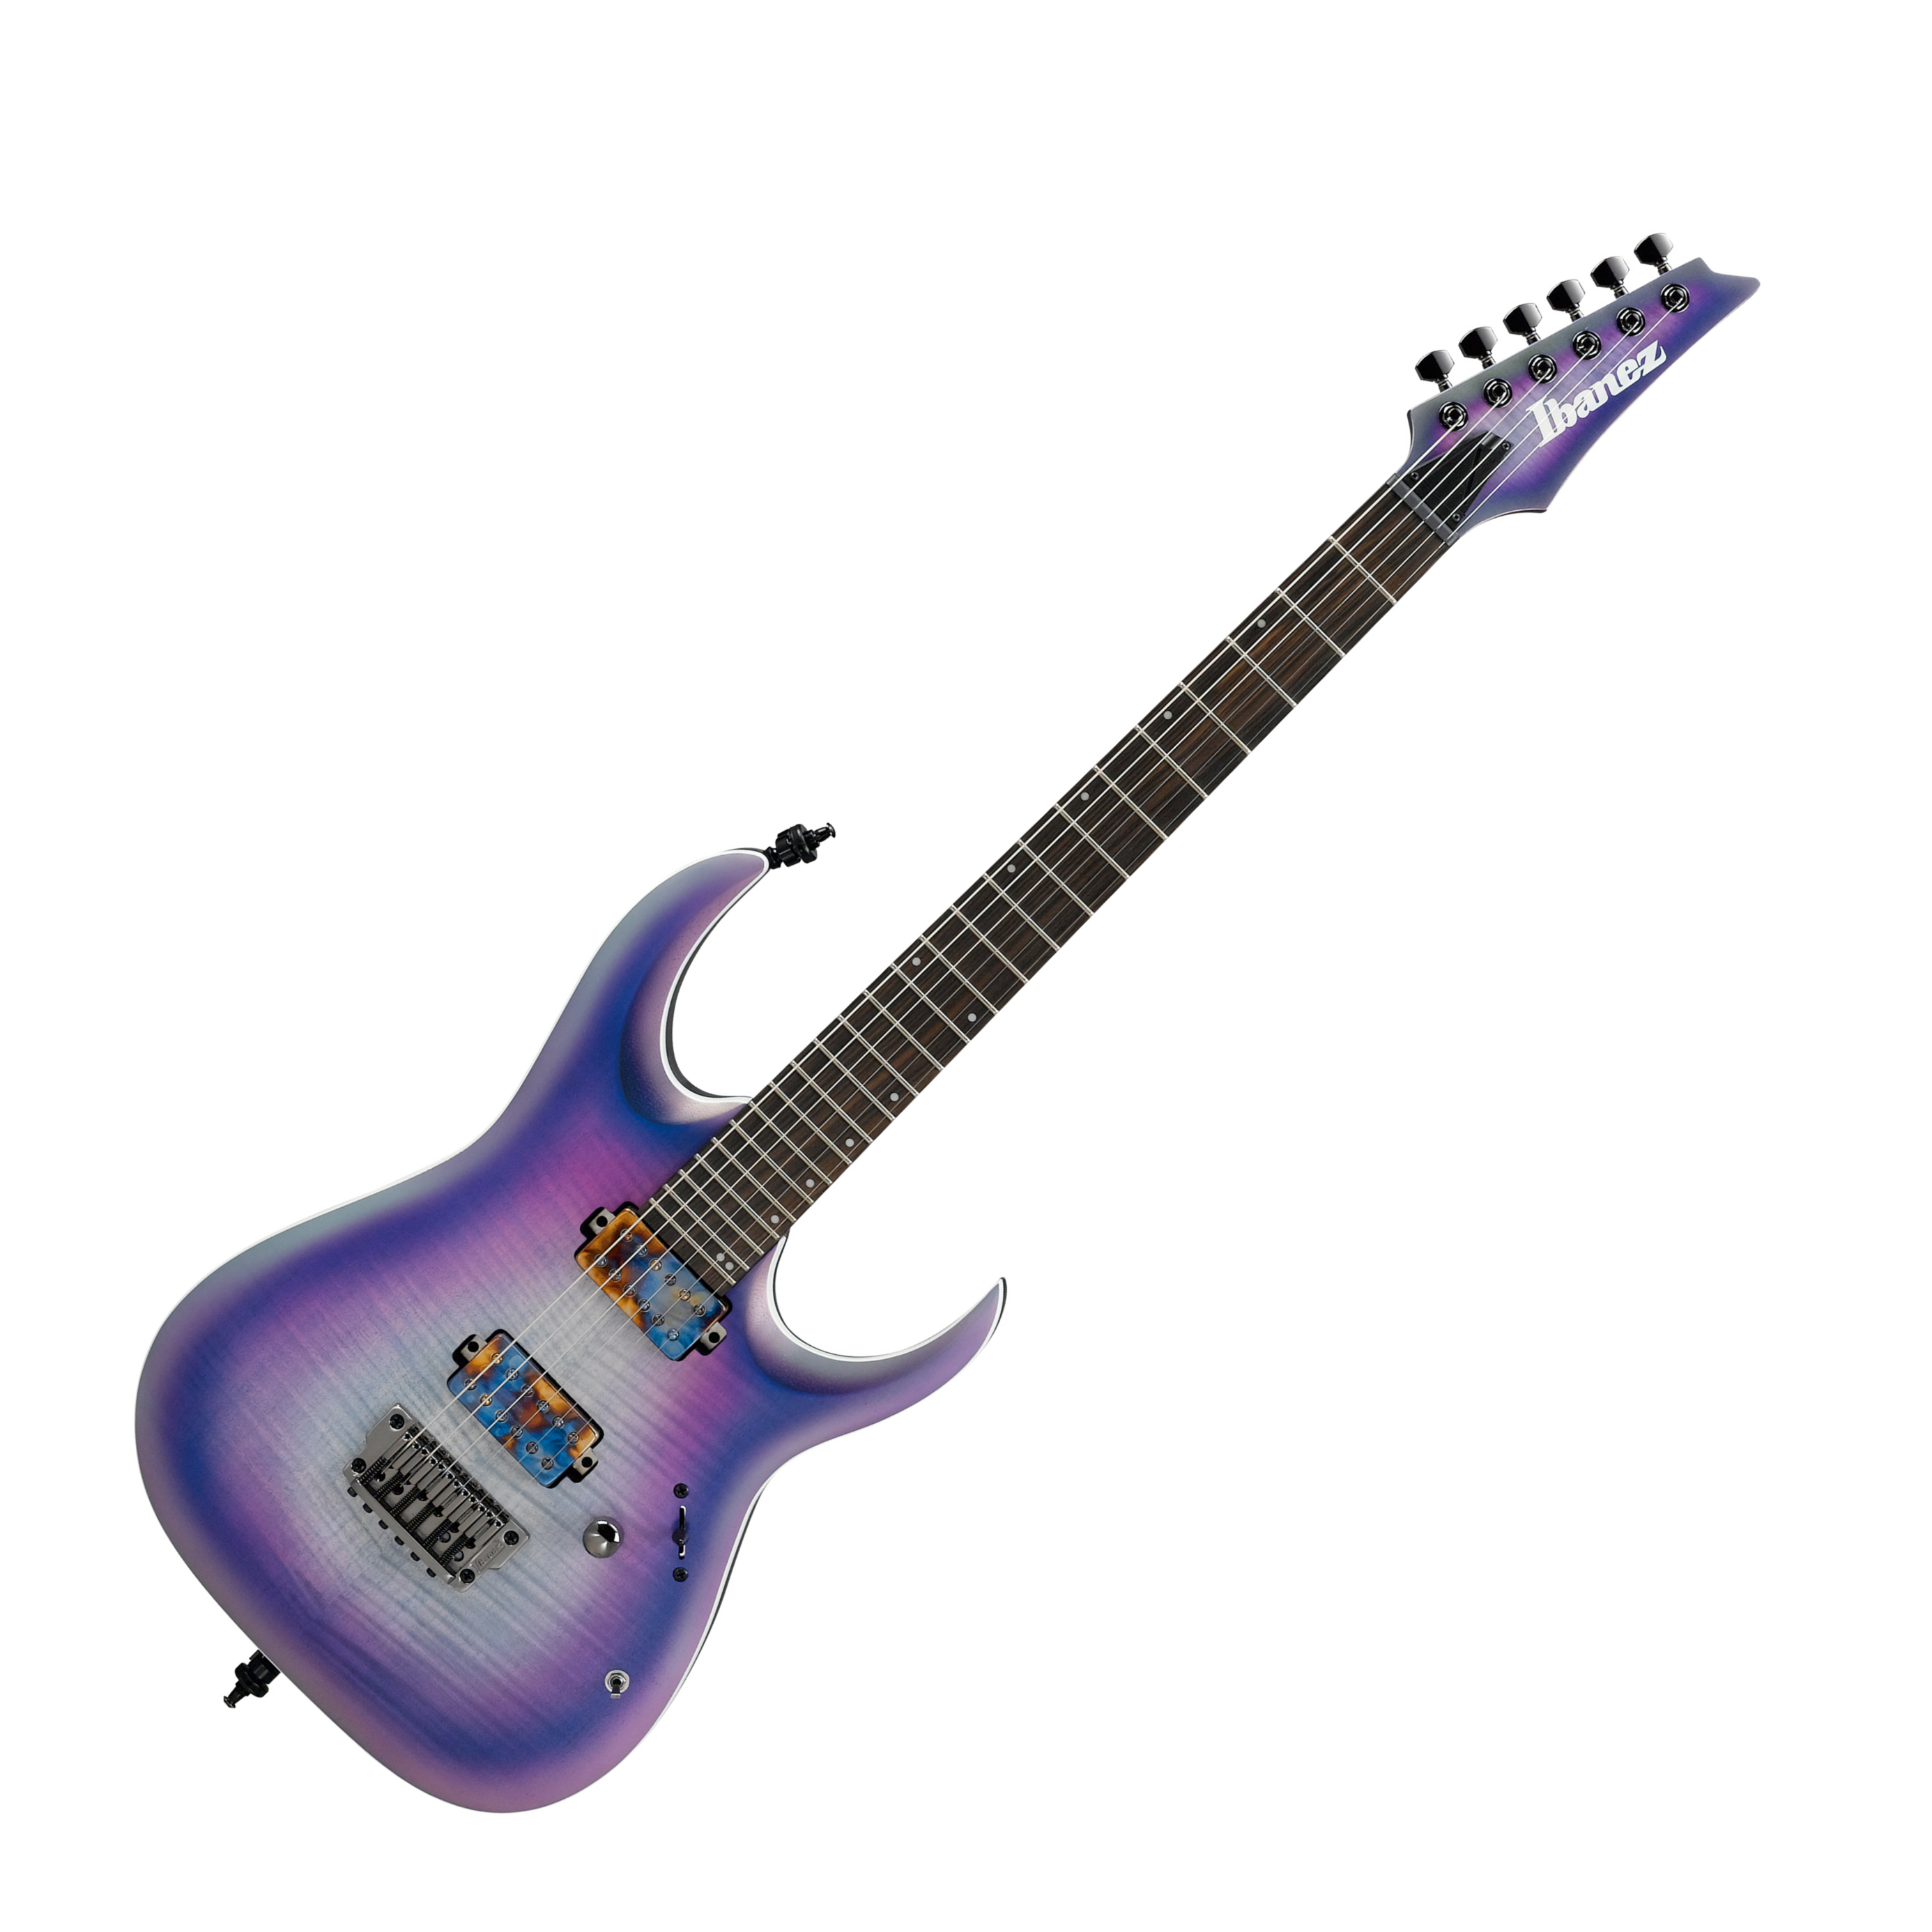 Ibanez Rga61al Iaf Axion Label Hh Bare Knuckle Ht Eb - Indigo Aurora Burst Flat - Metal electric guitar - Variation 1